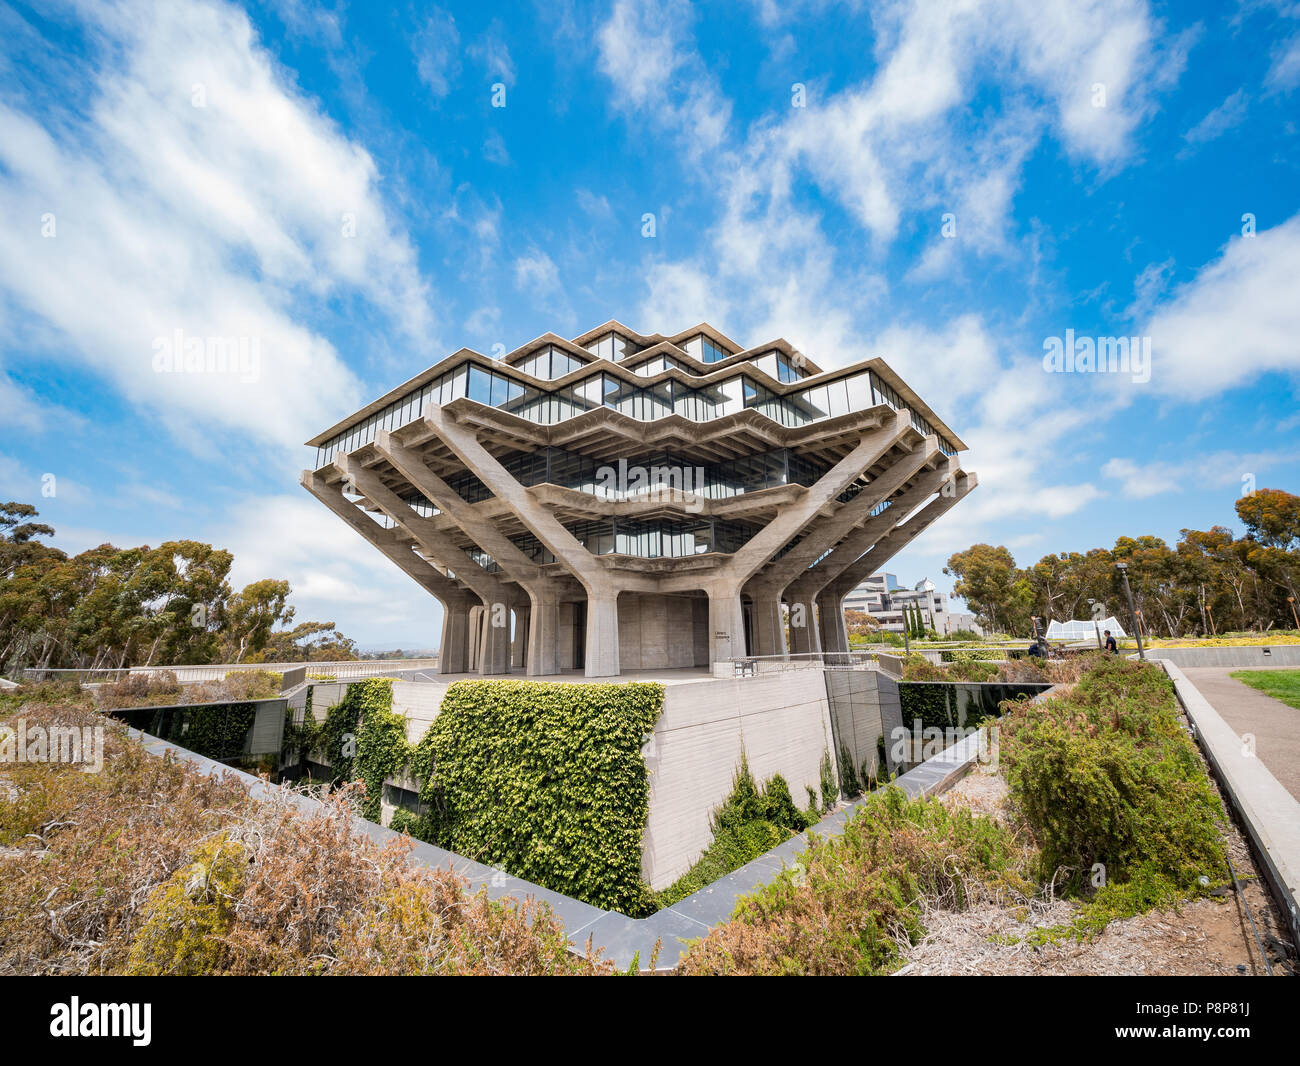 San Diego, JUN 29: The famous Geisel Library of Universtiy of California San Diego on JUN 29, 2018 at San Diego, California Stock Photo